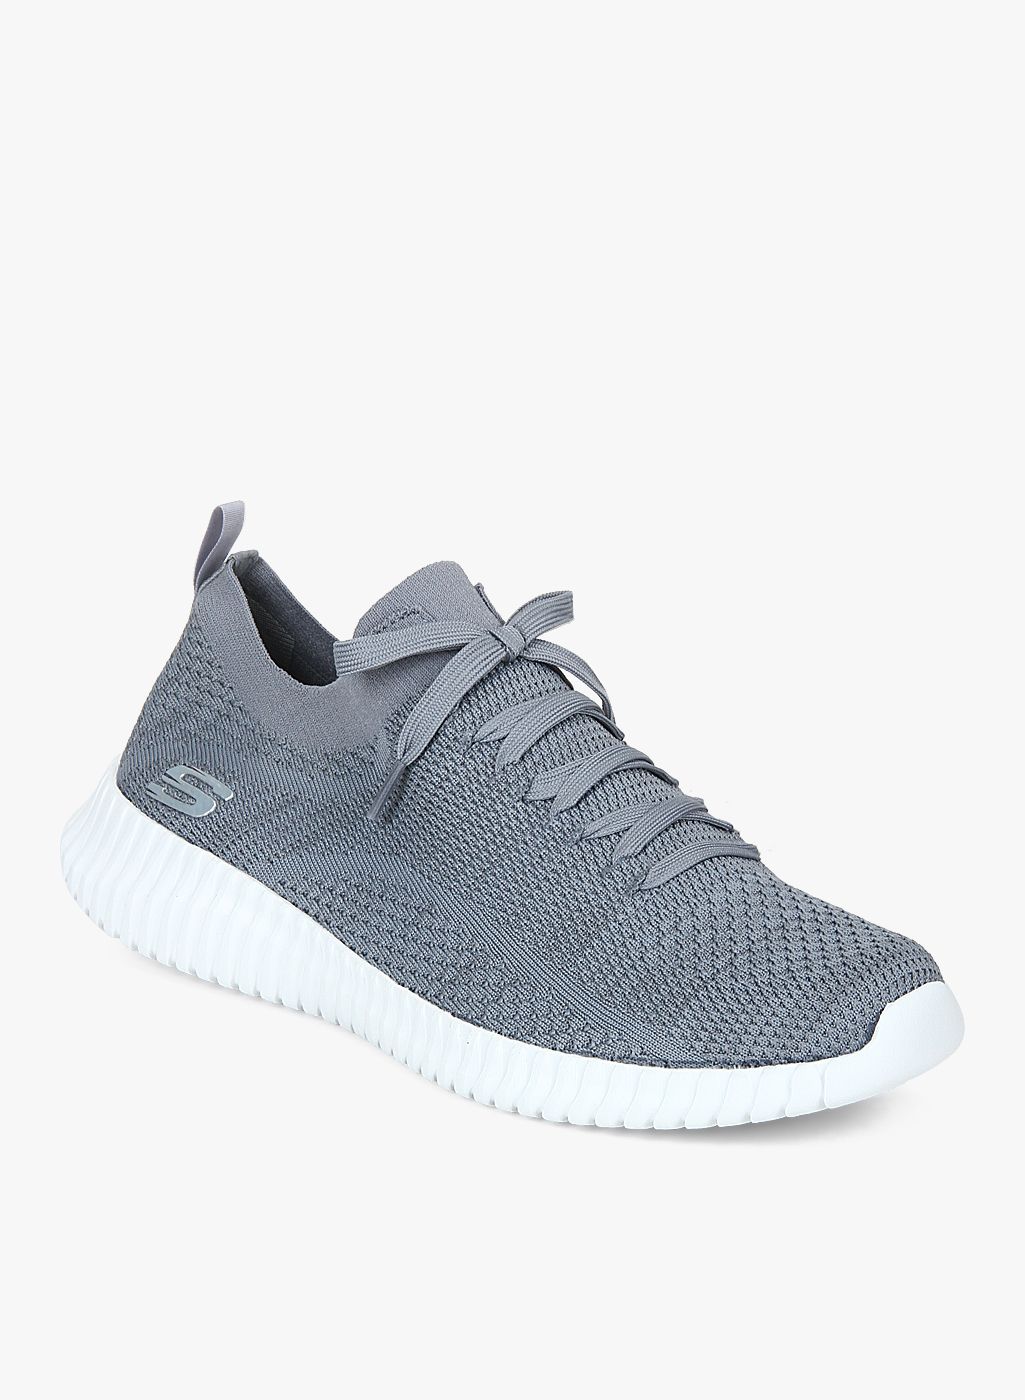 skechers shoes grey